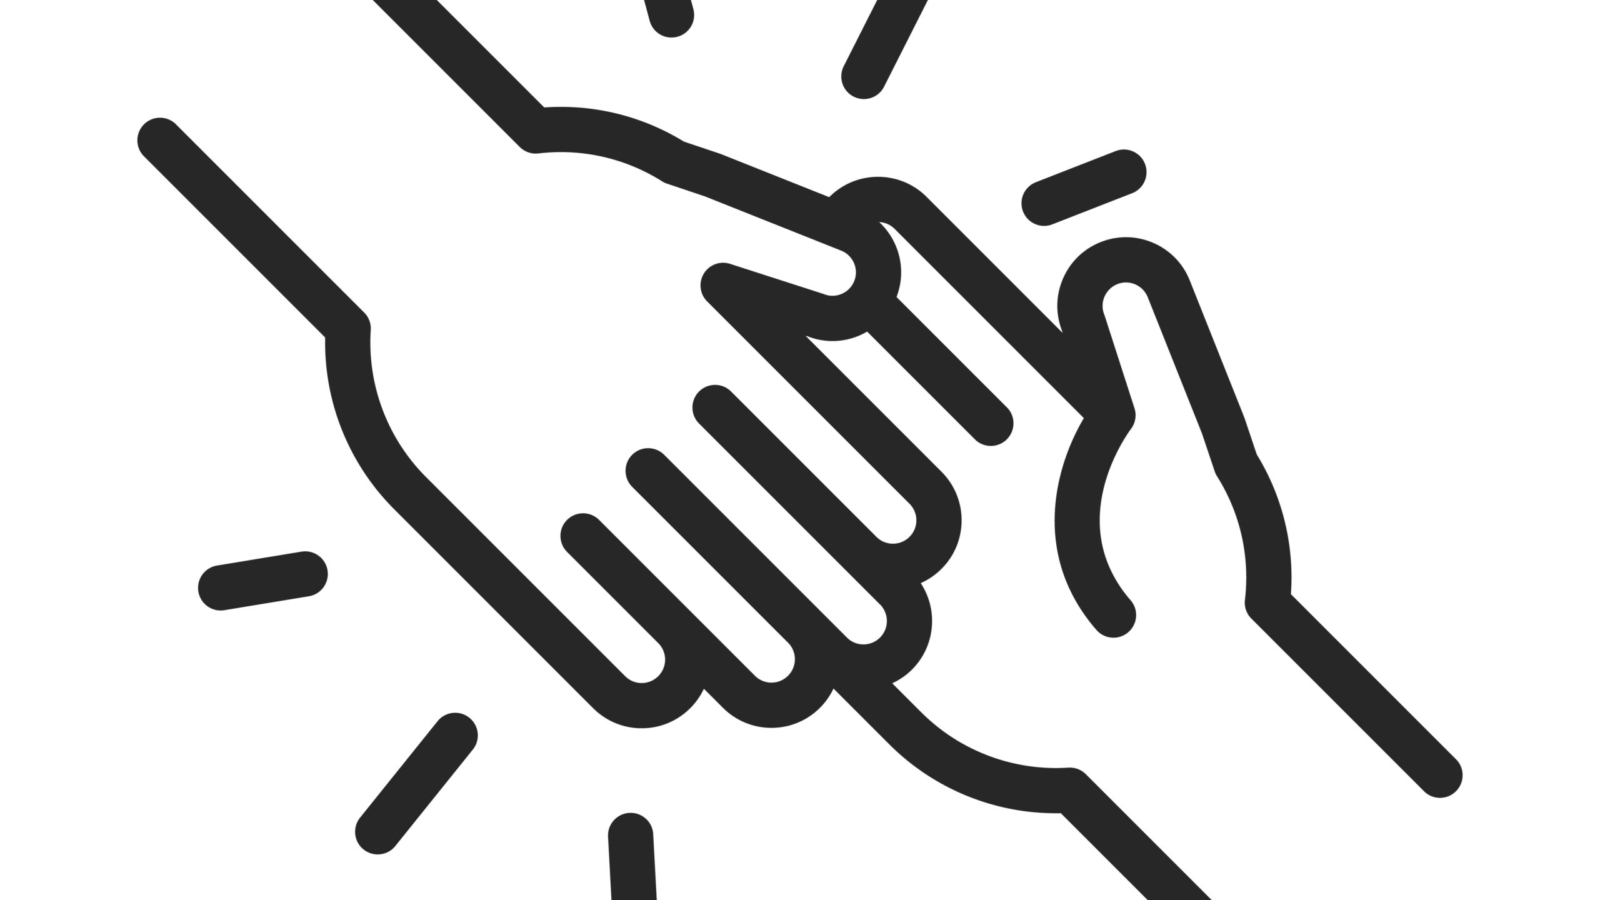 donation charity volunteer help social handshake assistance line style icon vector illustration